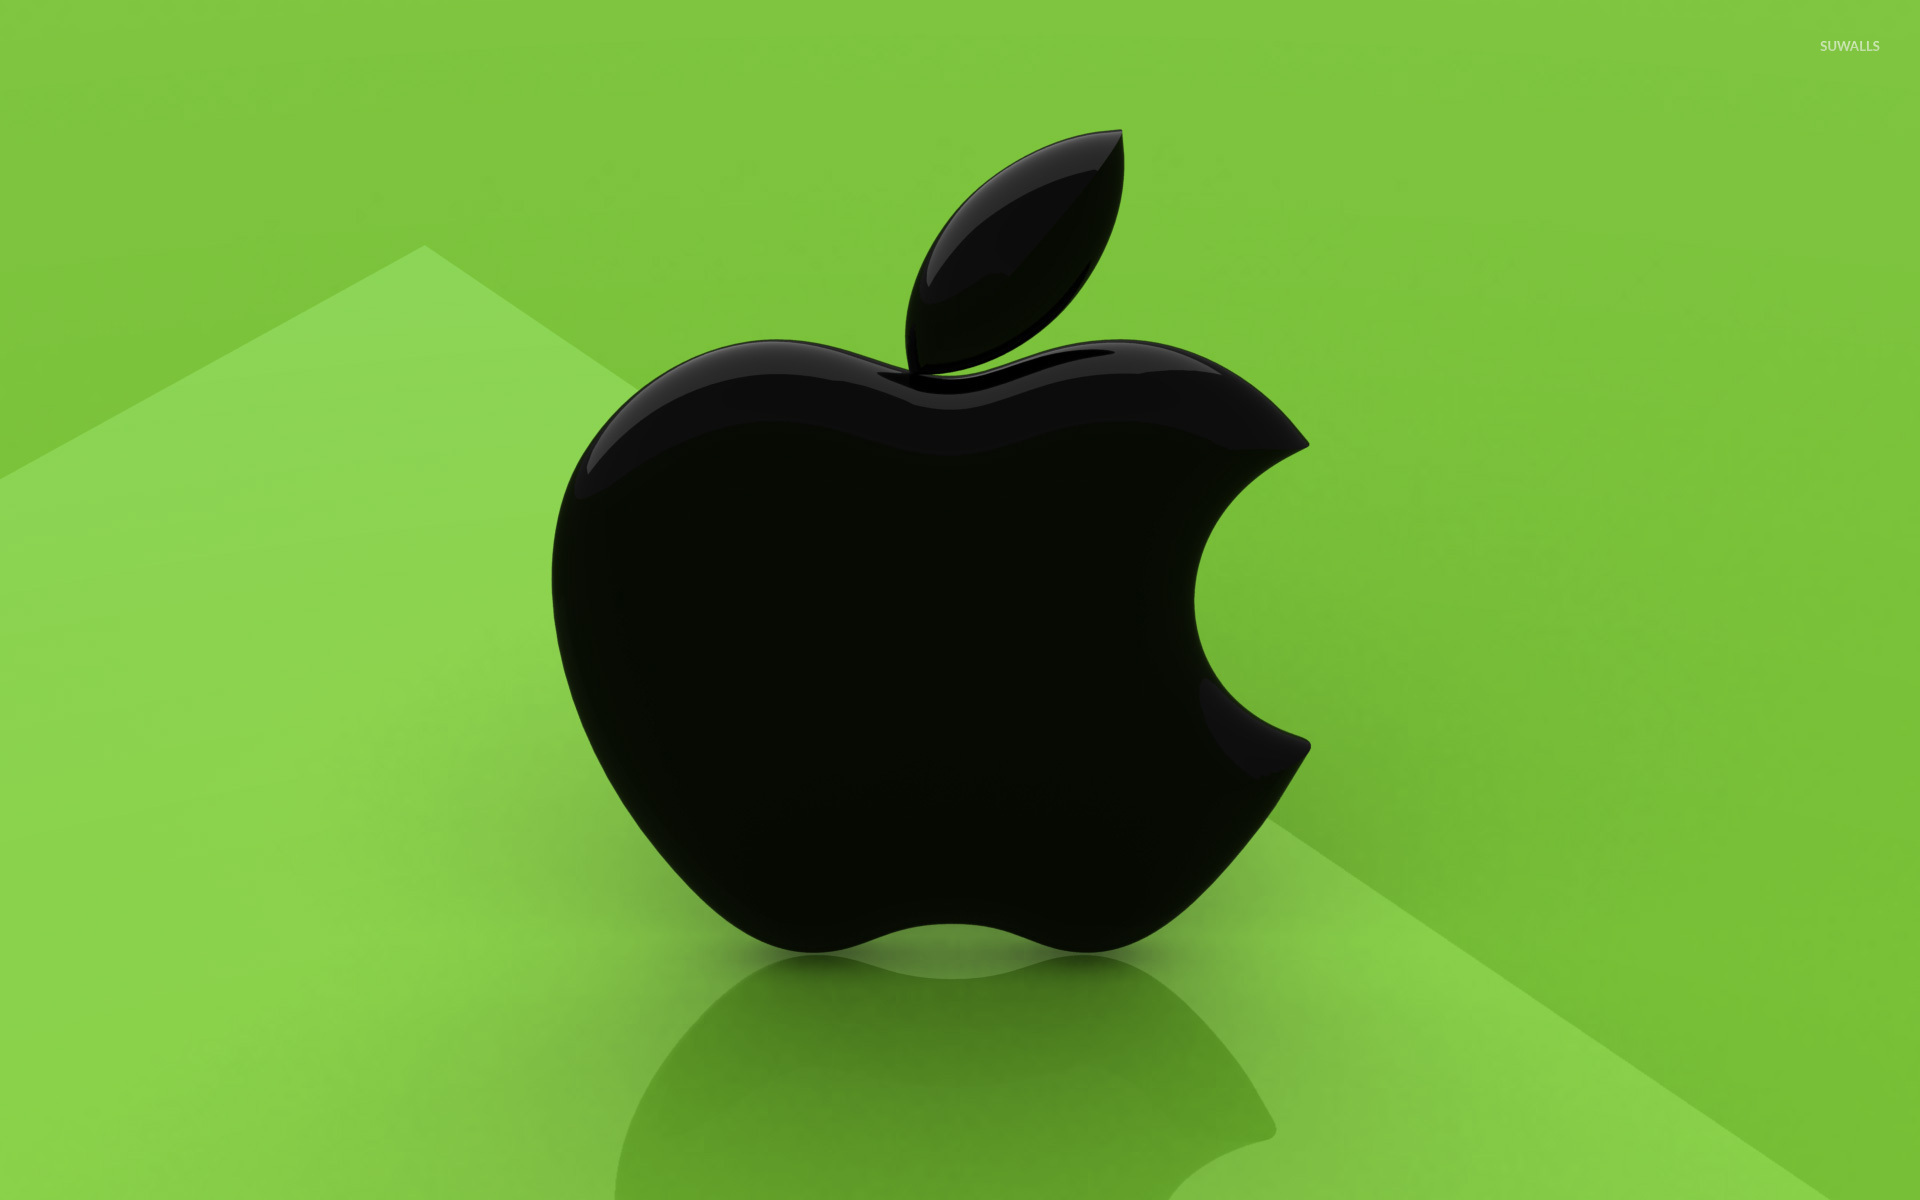 Обои на айфон яблоко. Эпл айфон. Черное яблоко. Логотип Apple. Яблоко айфон.